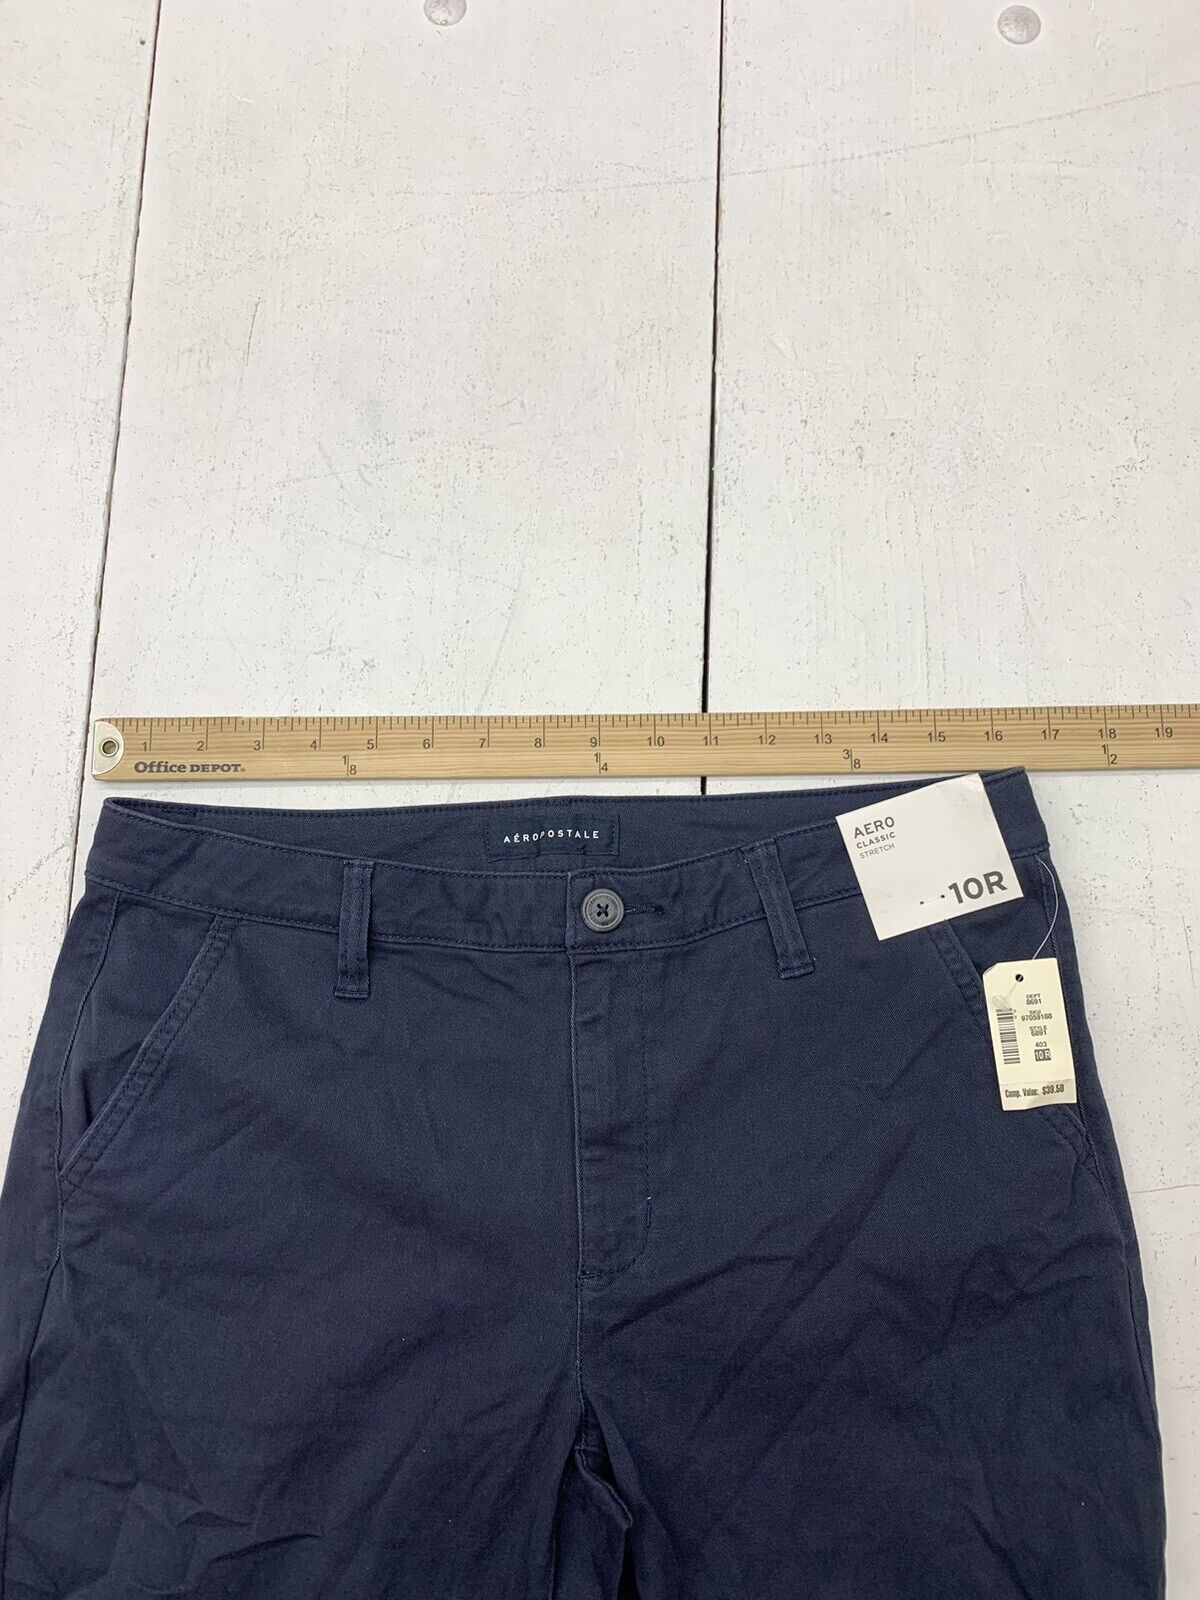 Aeropostale Womens Dark Blue Stretch Pants Size 10R - beyond exchange